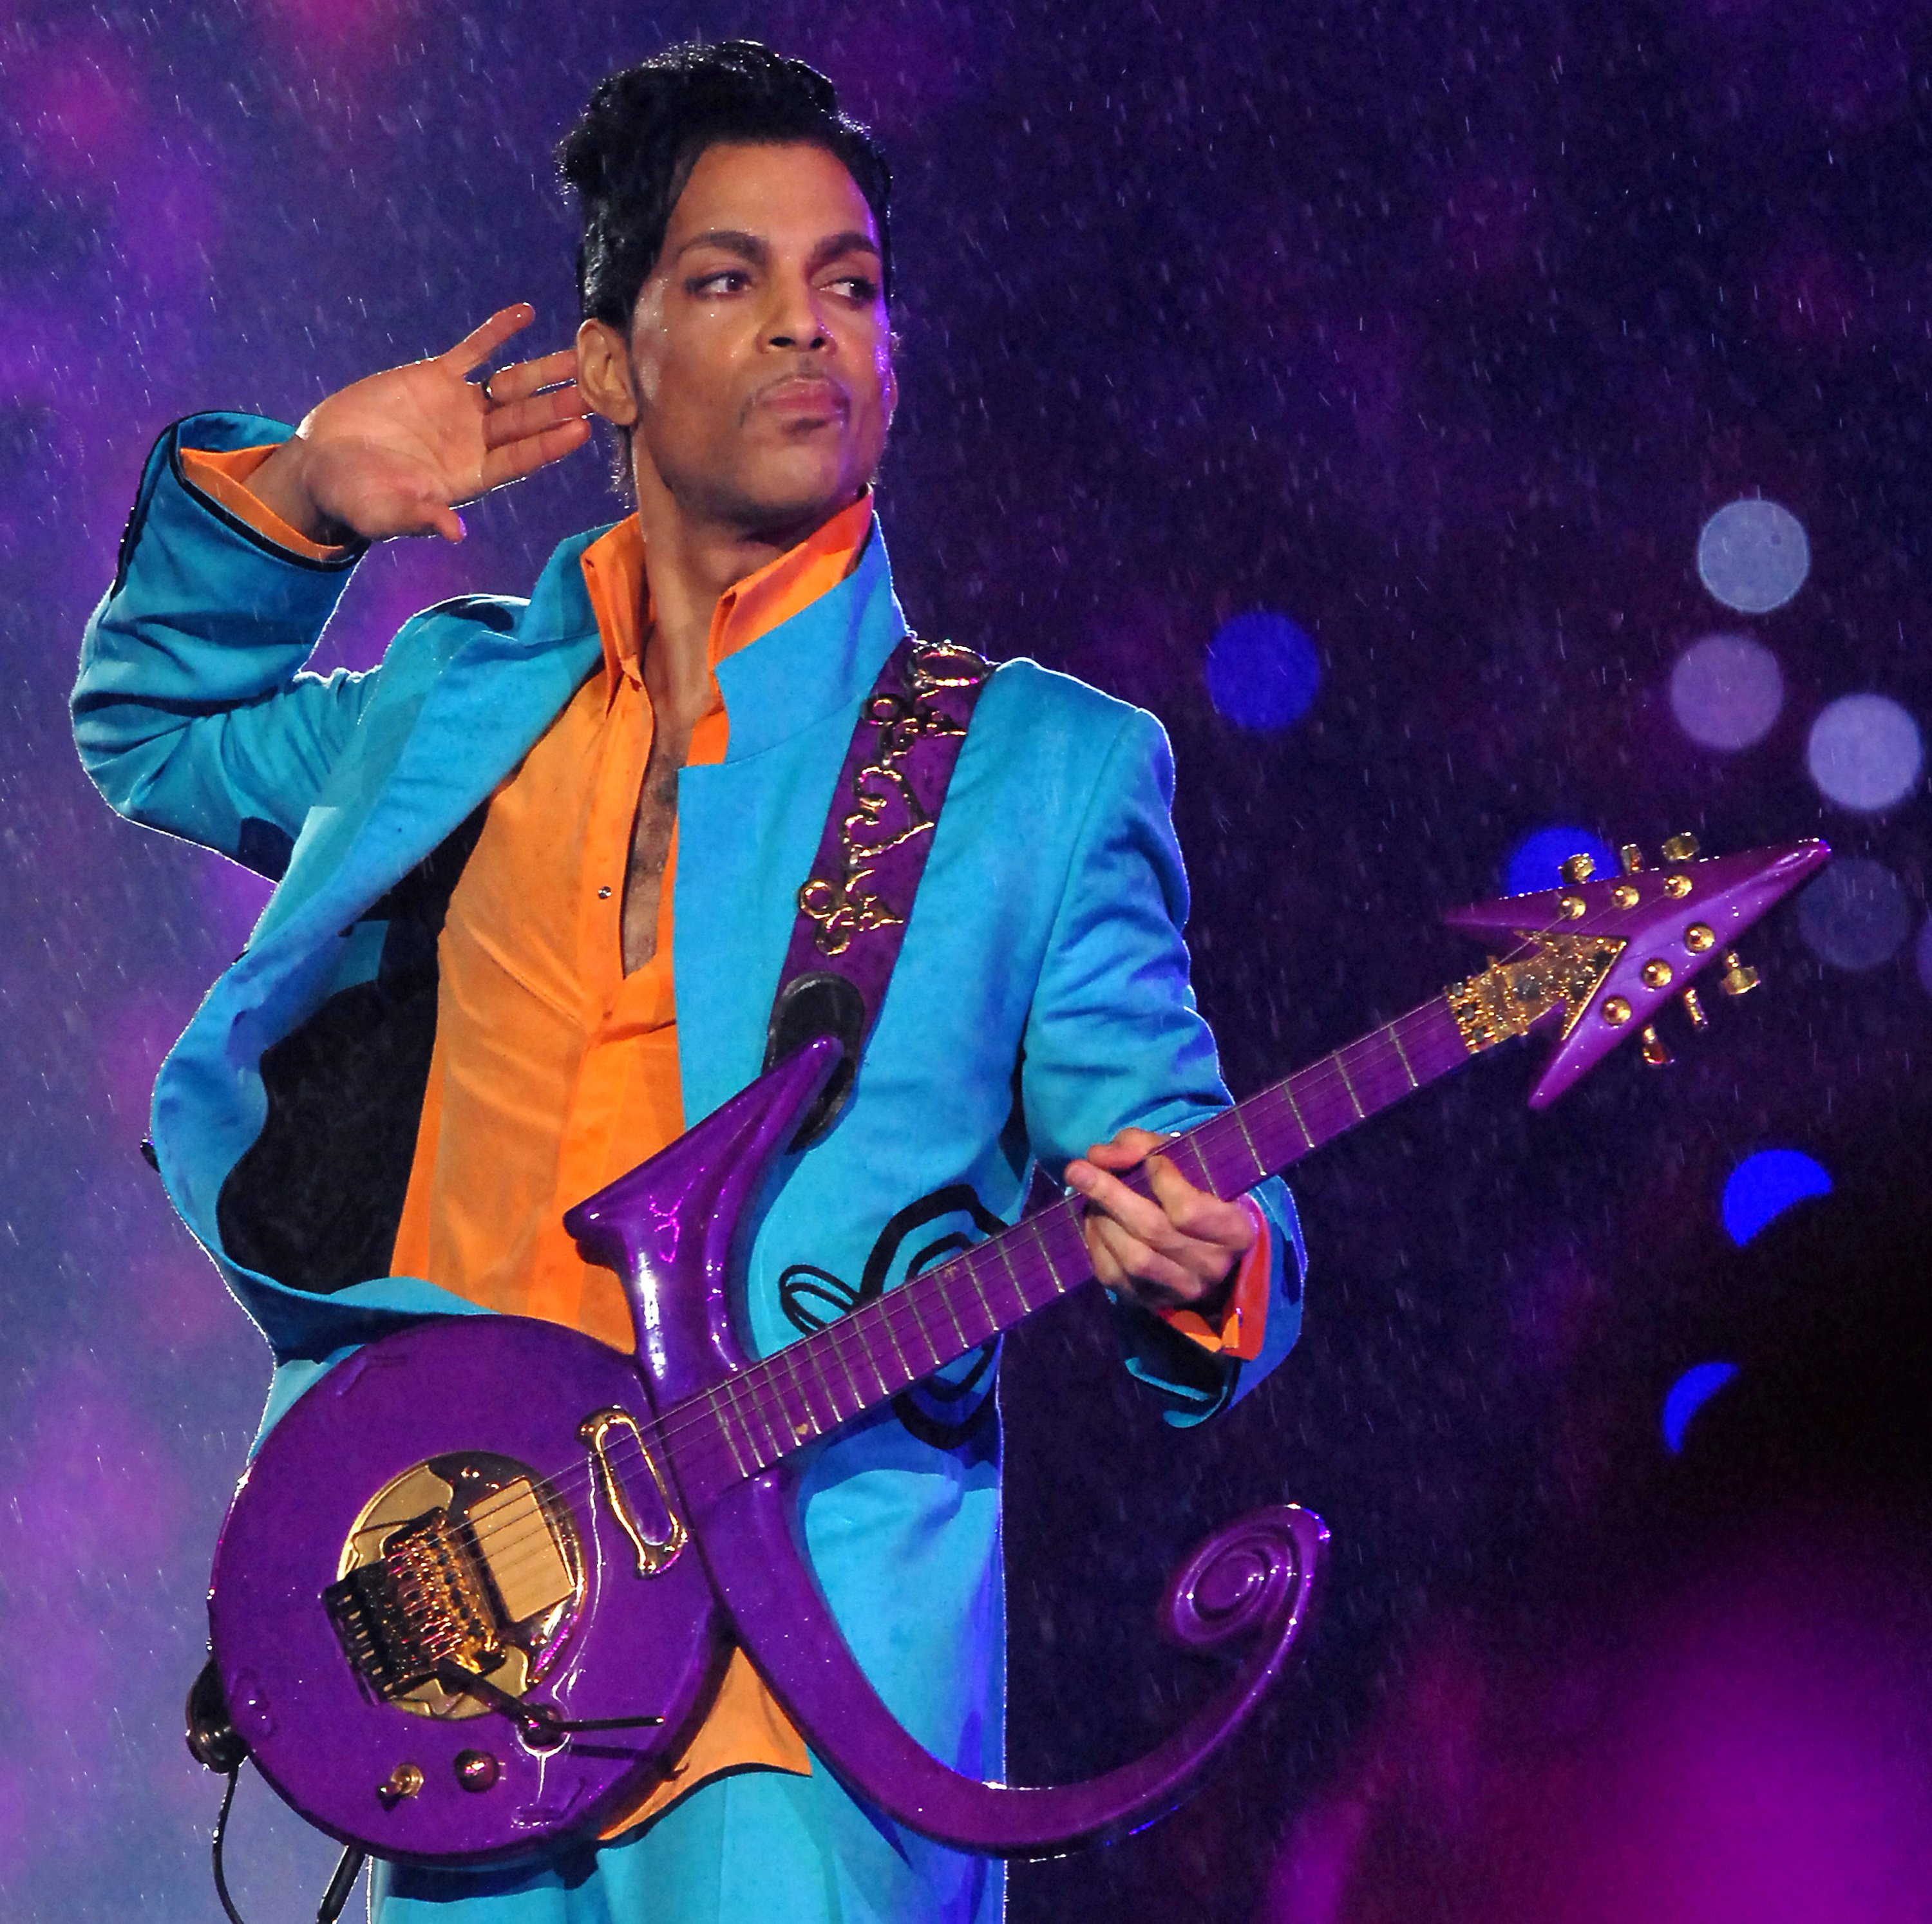 Prince holding a purple guitar